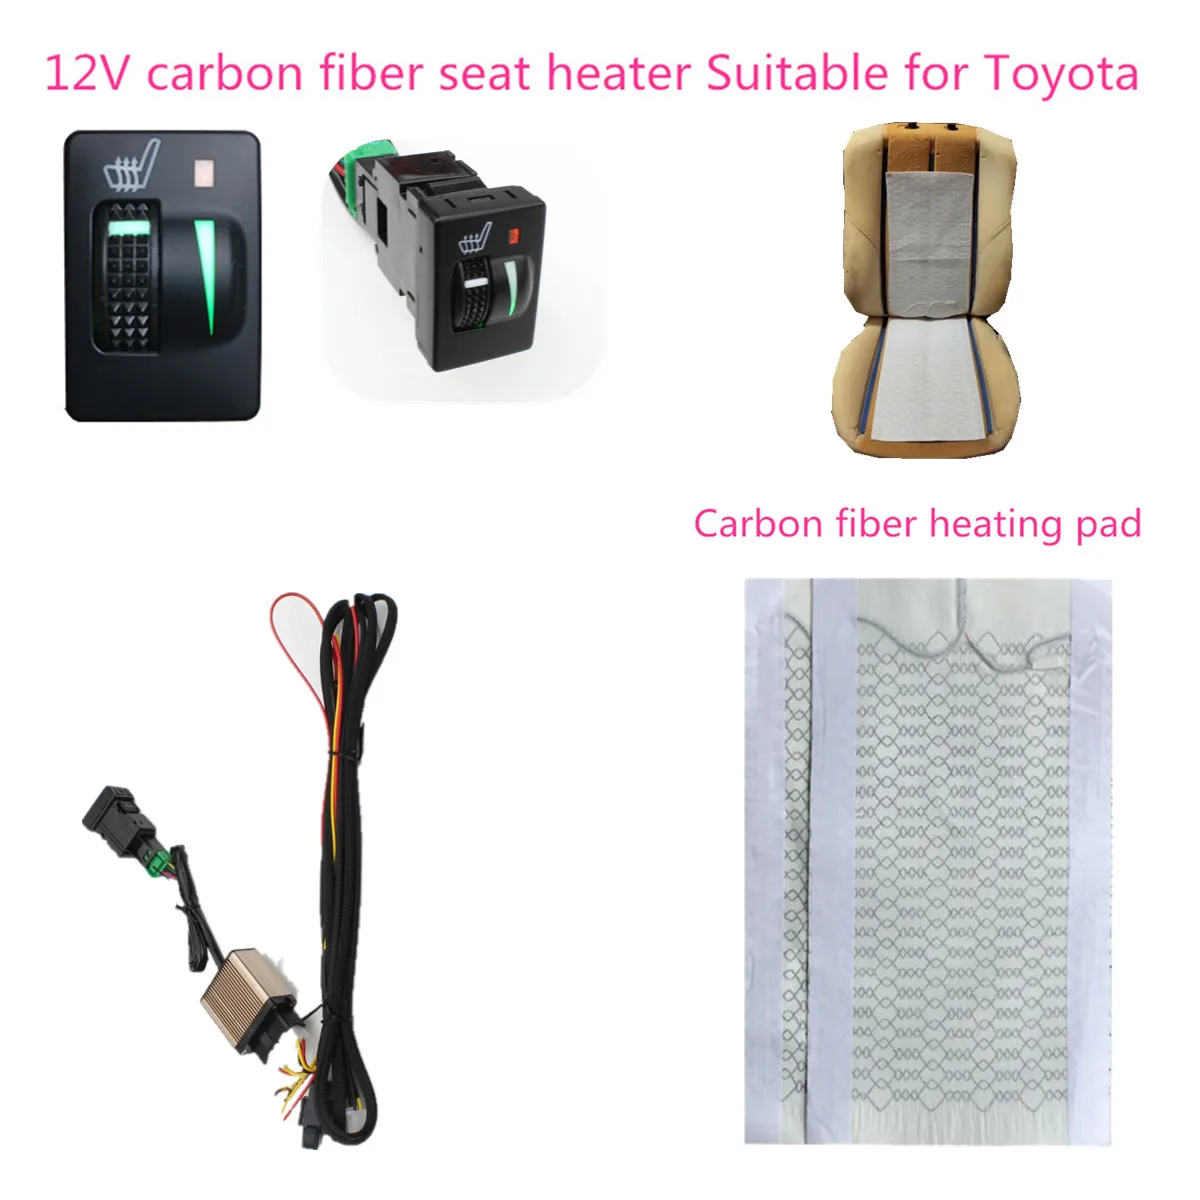 Rbon fiber heated seat heater for toyota cars prado corolla rav4 reiz yaris camry crown thumb200